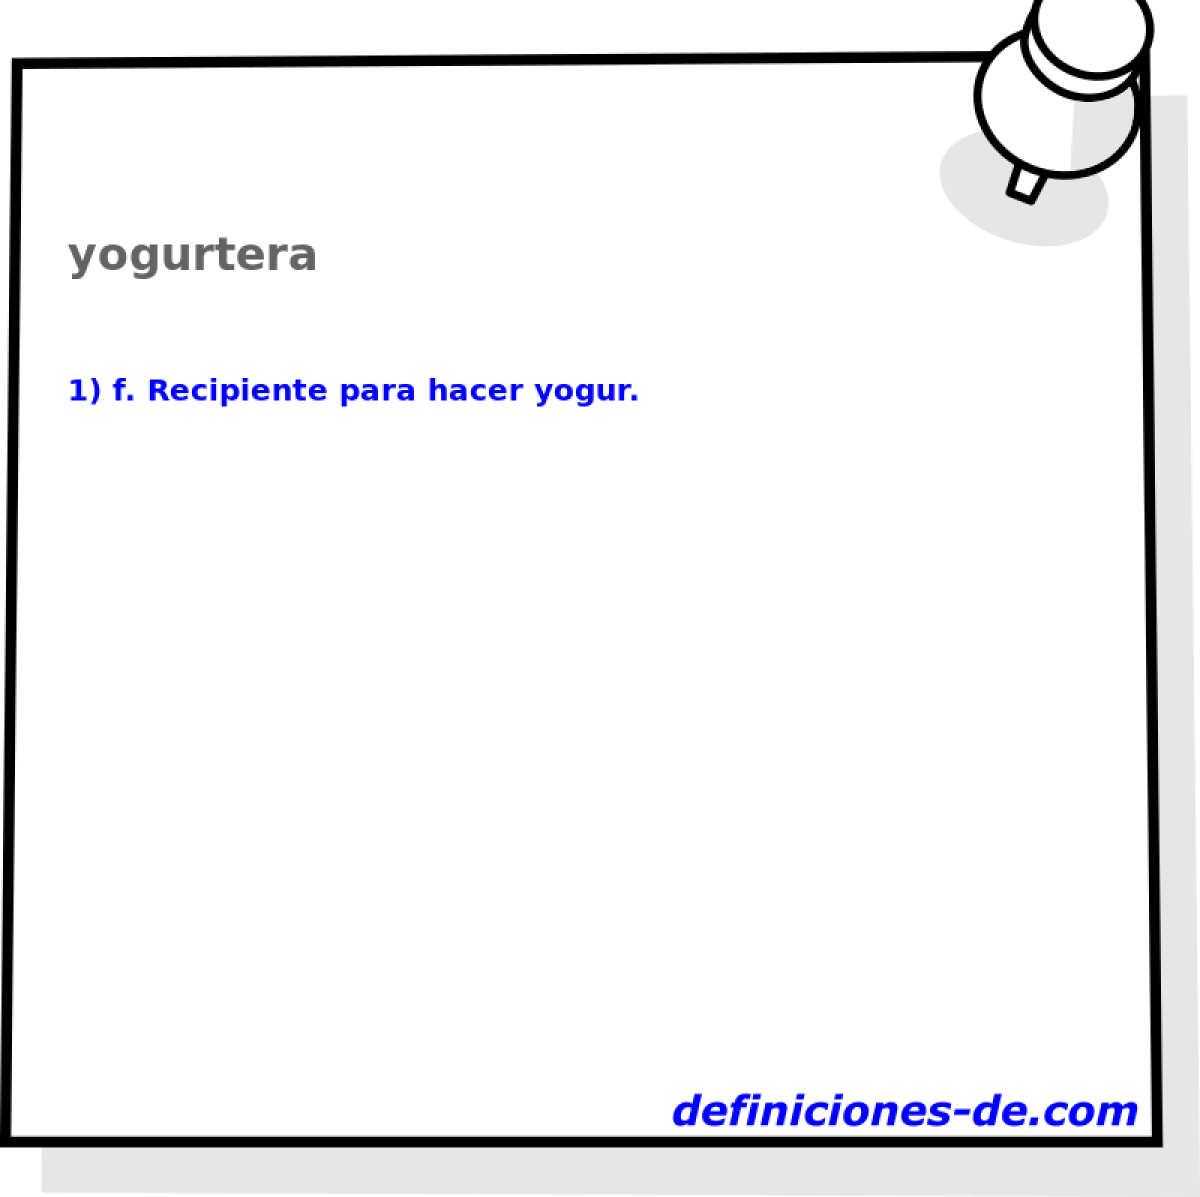 yogurtera 